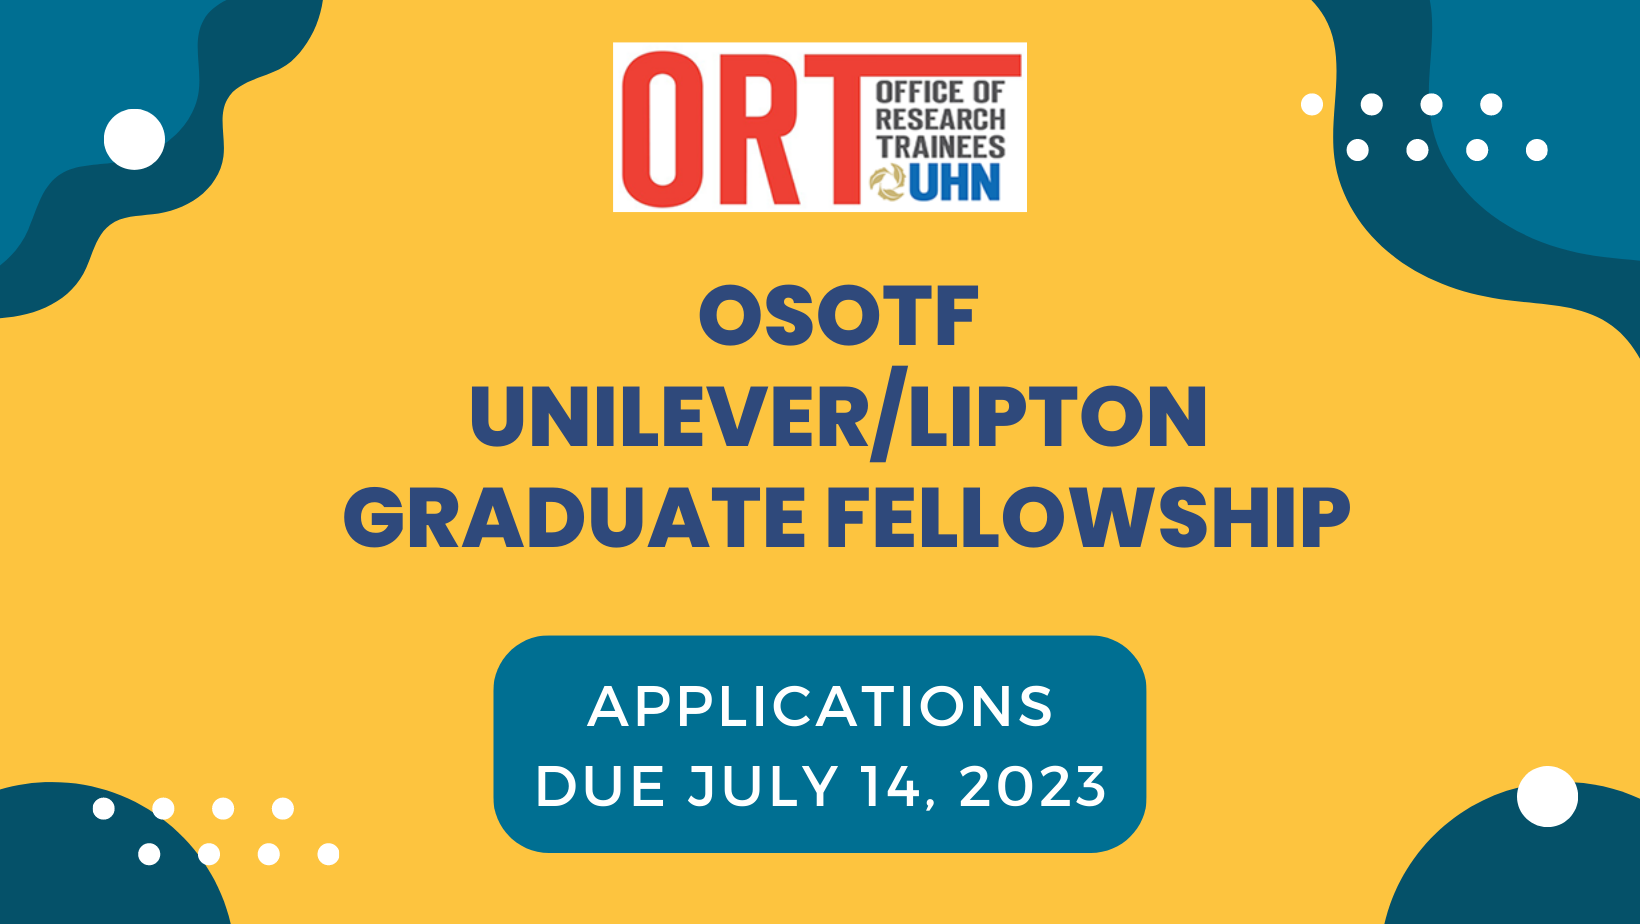 OSOTF Unilever/Lipton Graduate Fellowship. Applications due July 14th, 2023